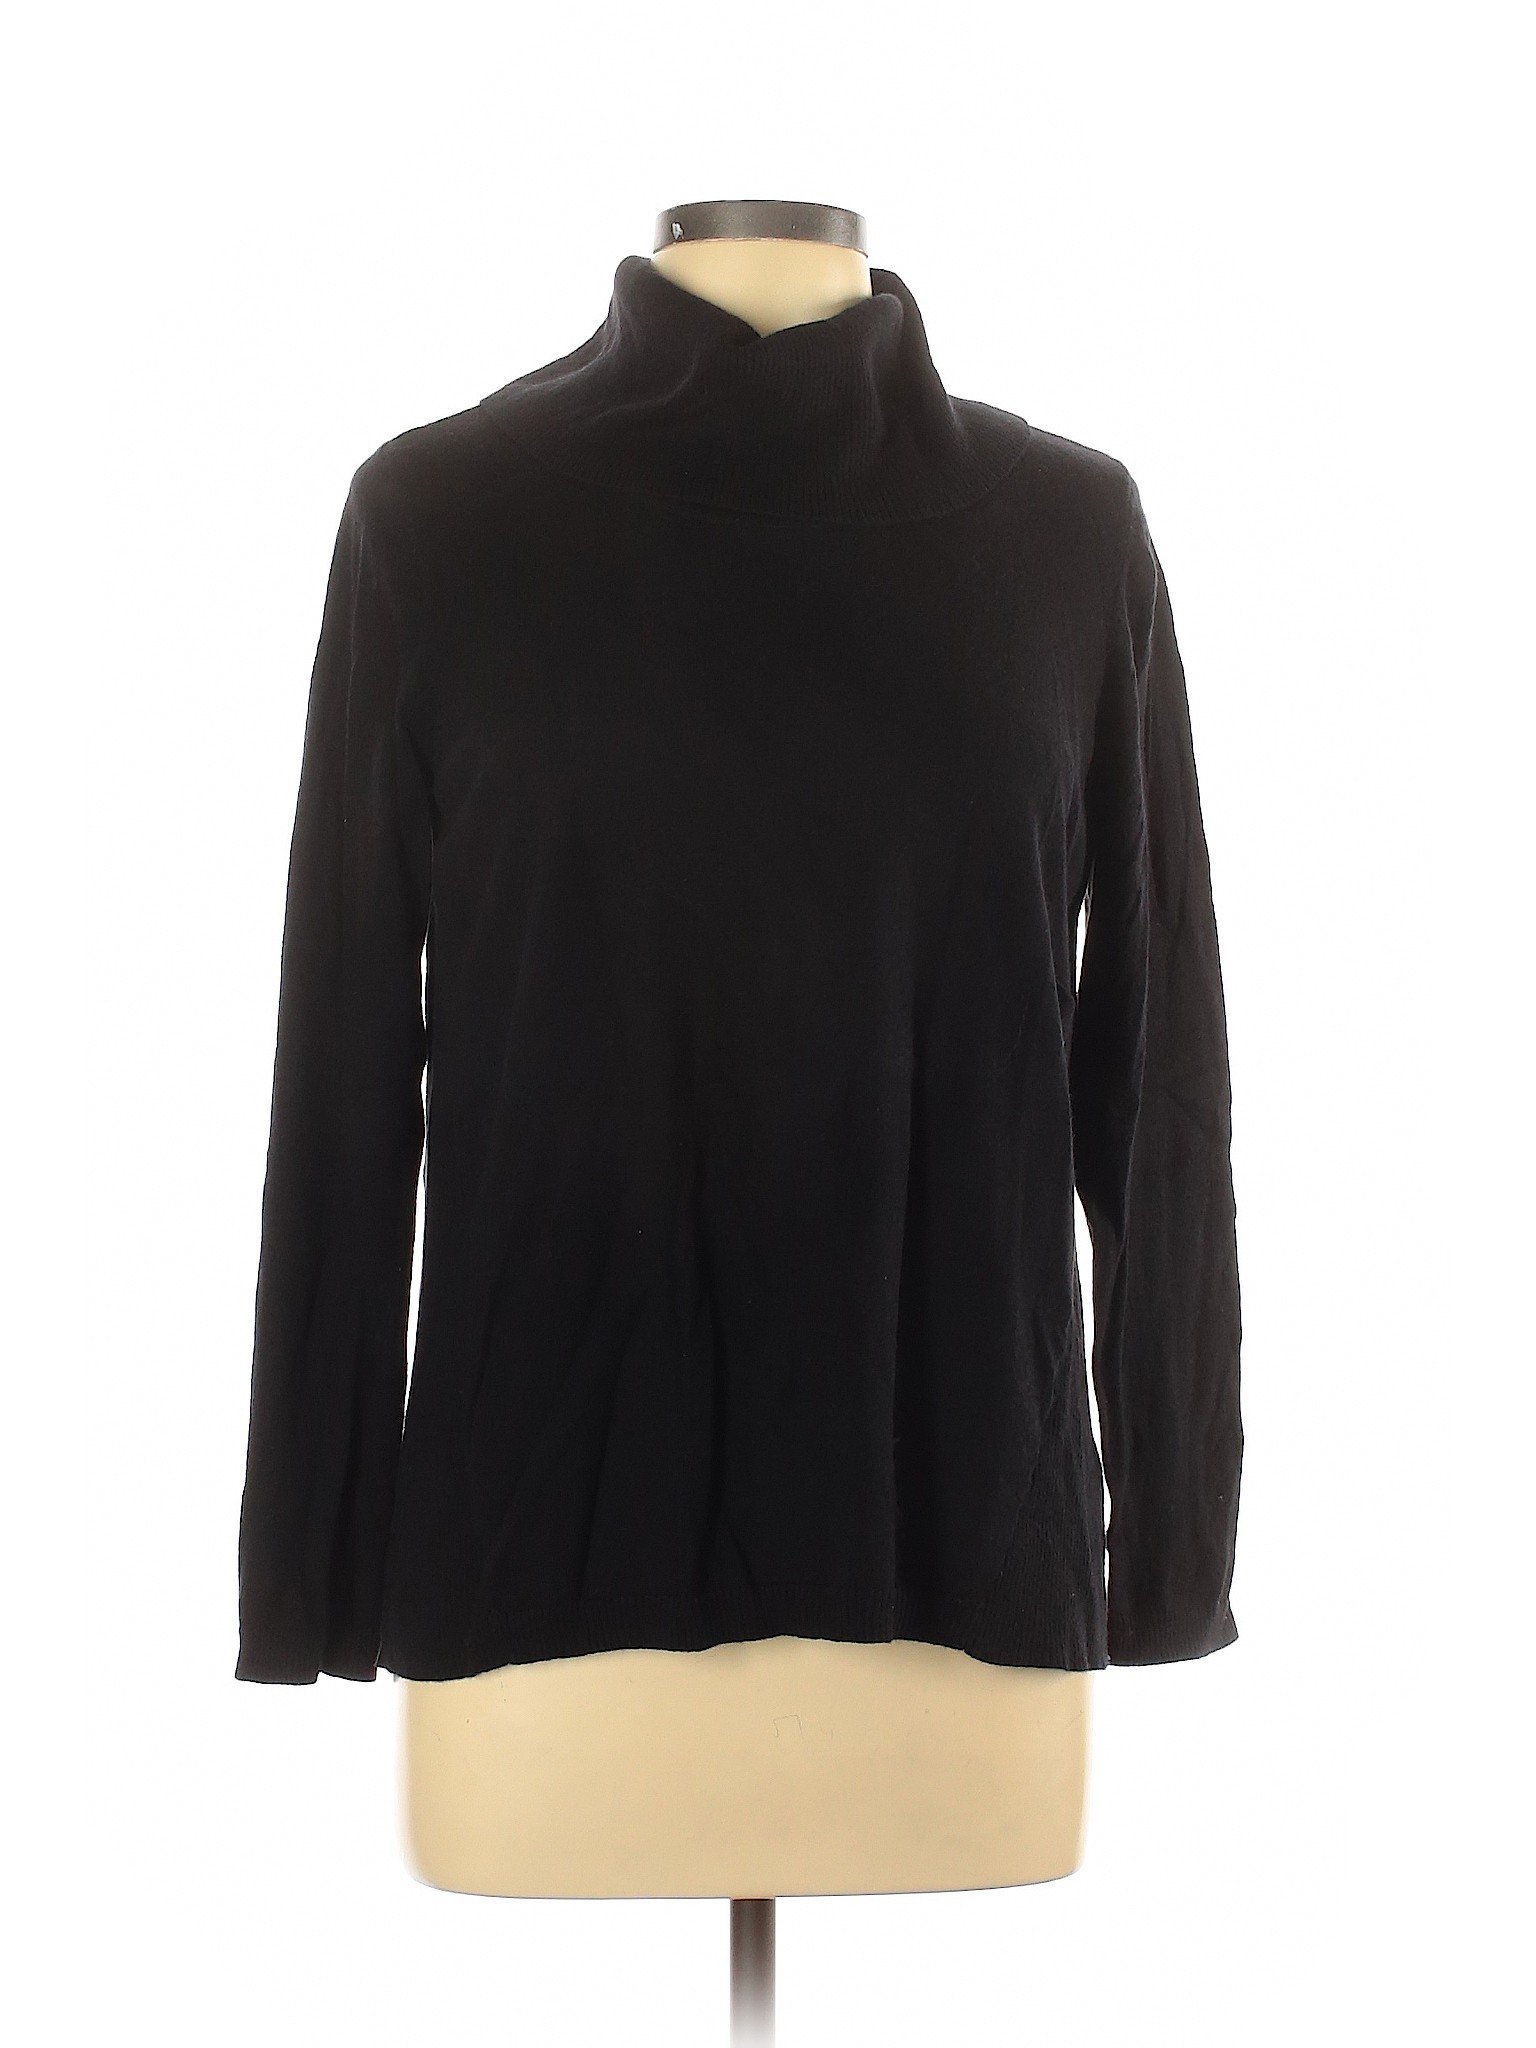 Chico's Women Black Turtleneck Sweater L | eBay